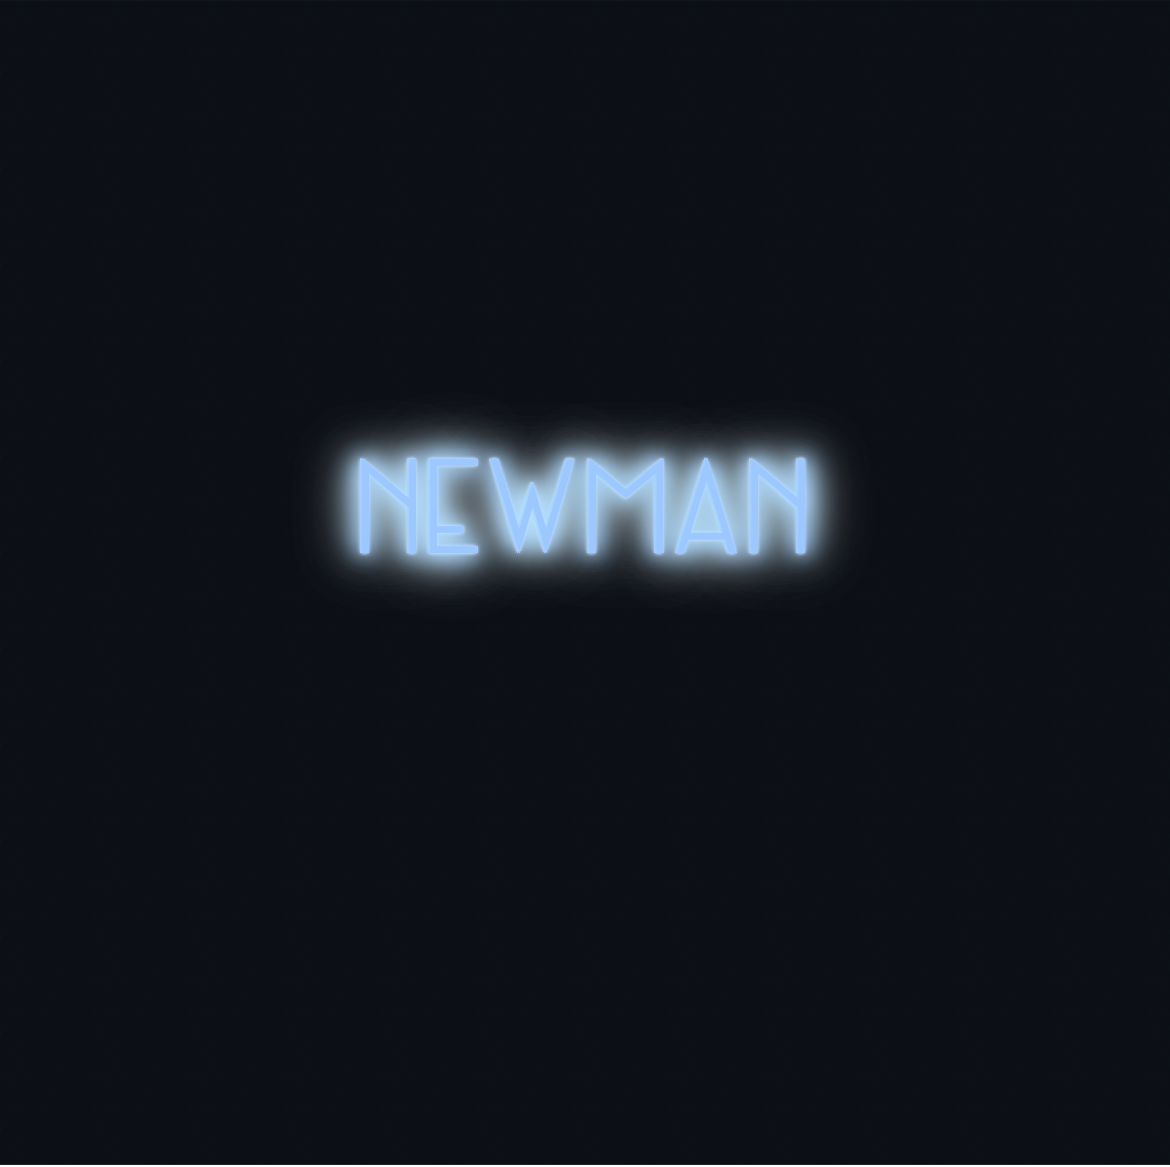 Custom neon sign - Newman